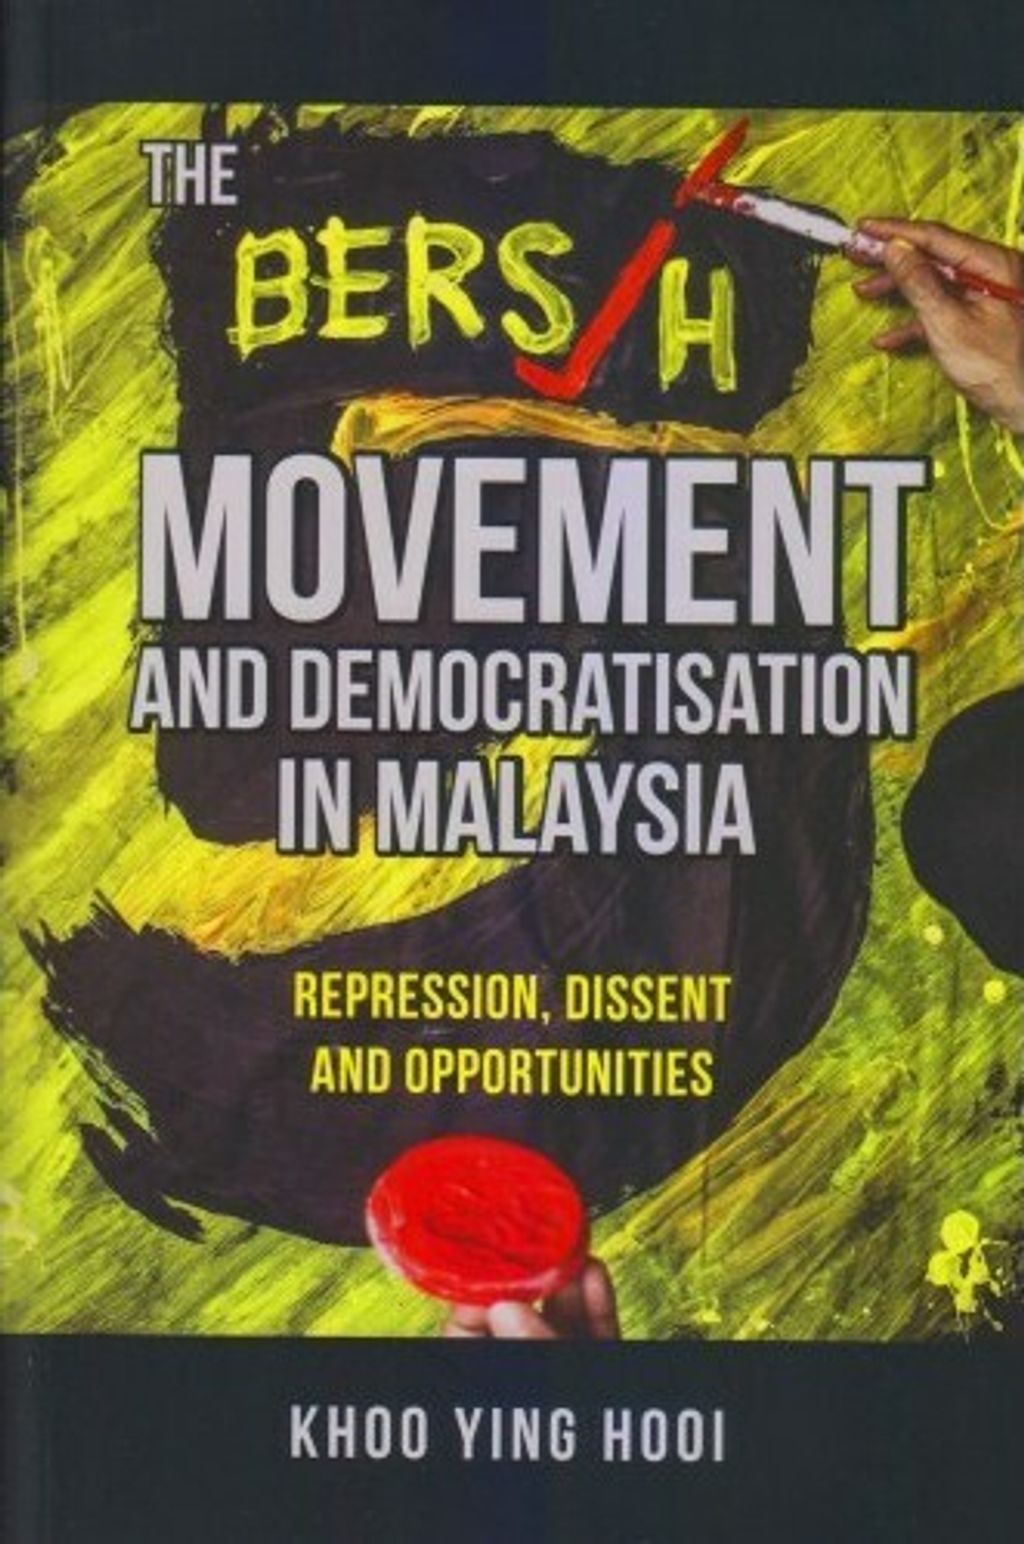 THE BERSIH MOVEMENT AND DEMOCRATISATION IN MALAYSIA